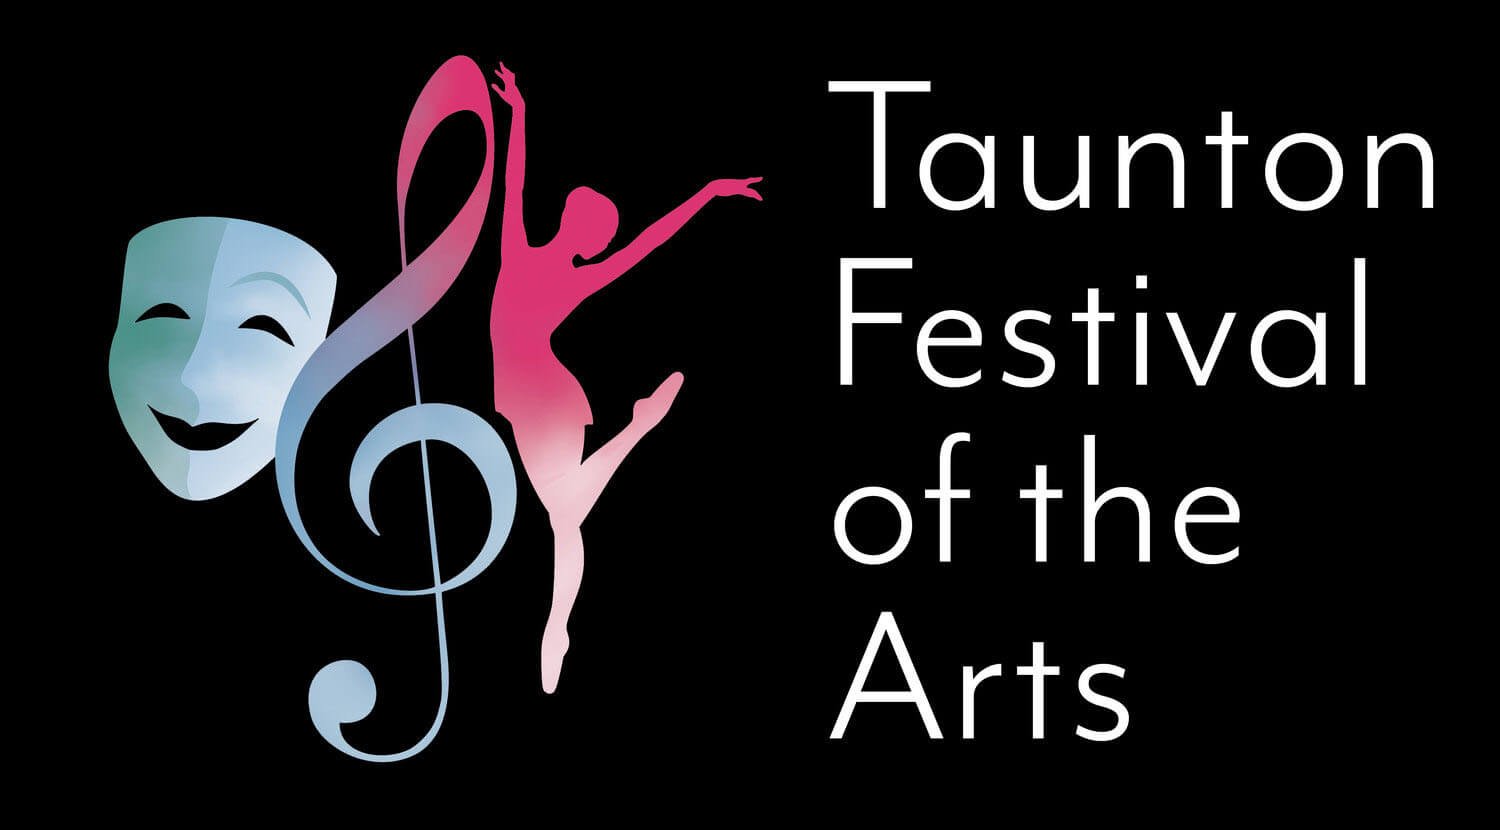 Taunton Festival of the Arts